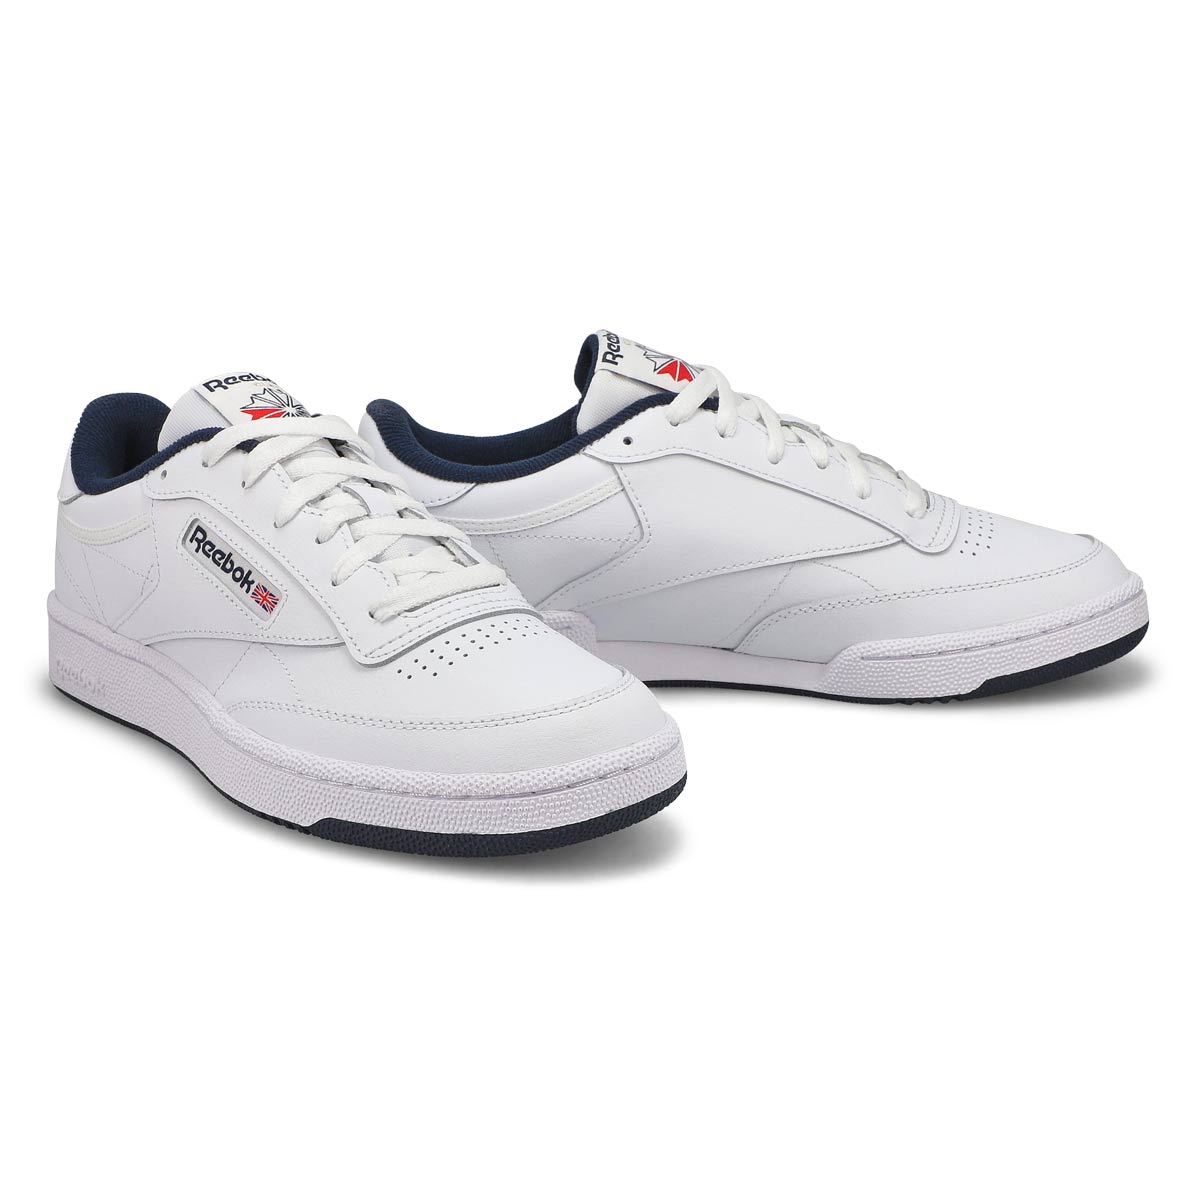 Men's Club C 85 Lace Up Sneaker - White/Navy